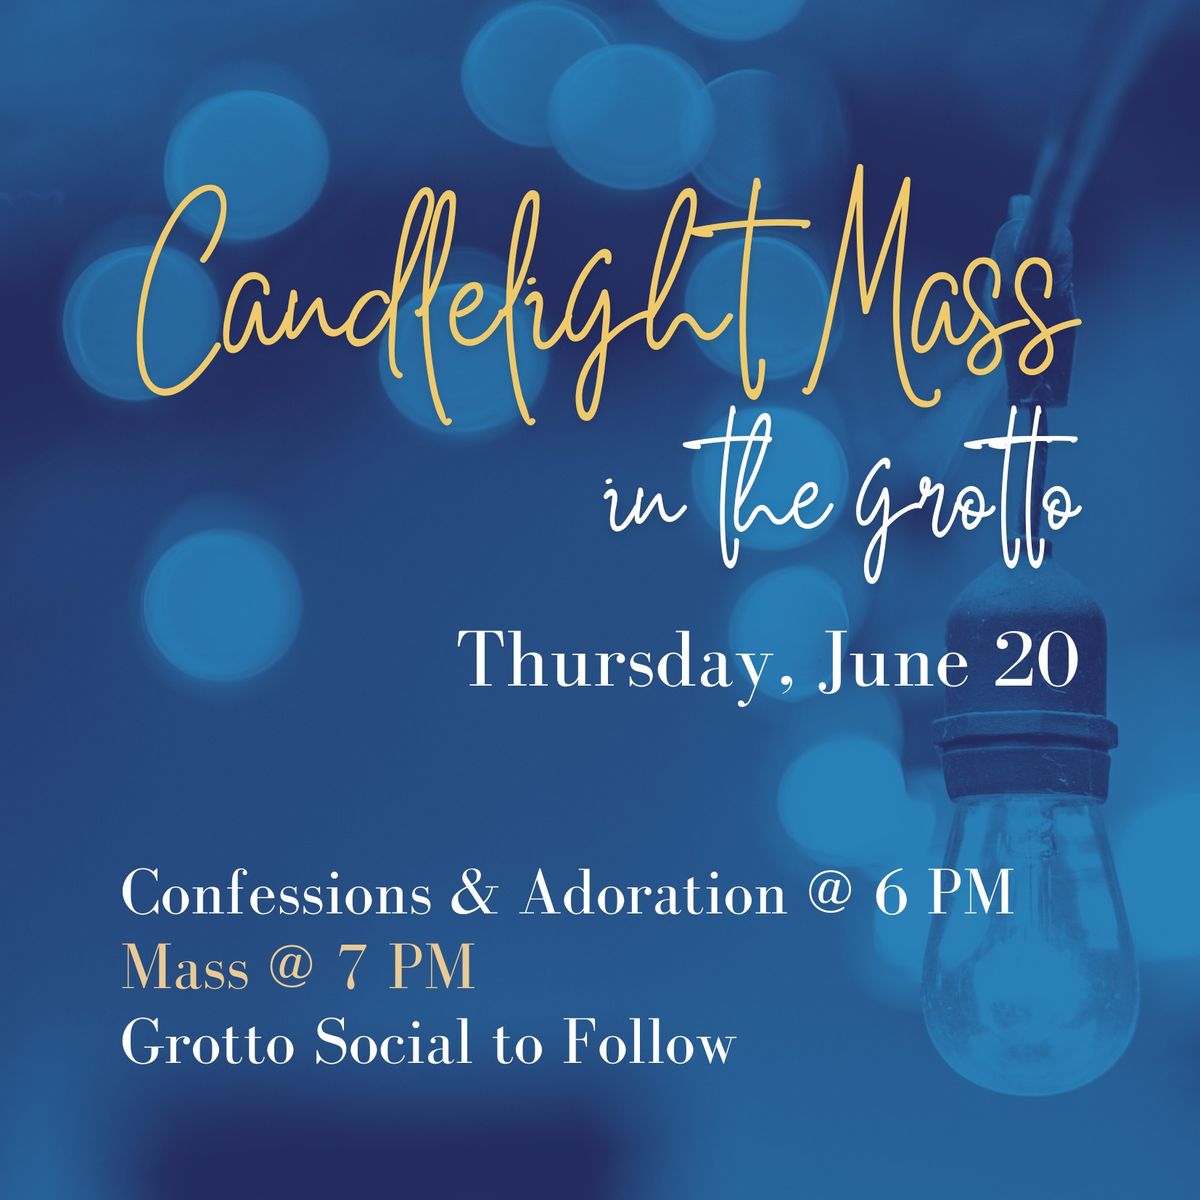 Candlelight Mass & Grotto Social